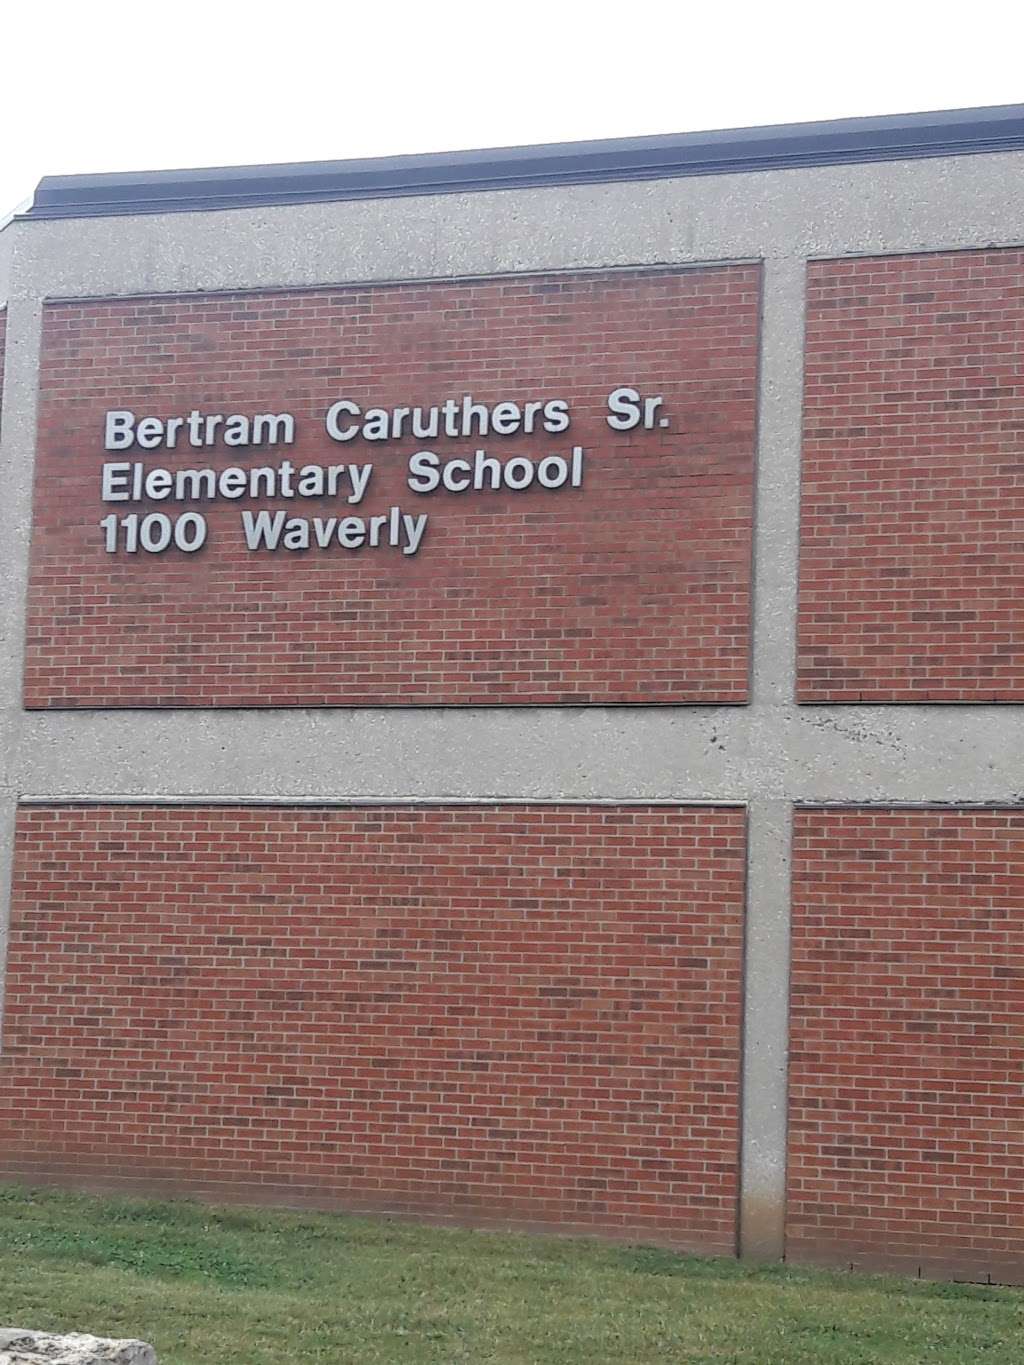 Bertram Caruthers Elementary School - school  | Photo 1 of 1 | Address: 1100 Waverly Ave, Kansas City, KS 66104, USA | Phone: (913) 627-4750